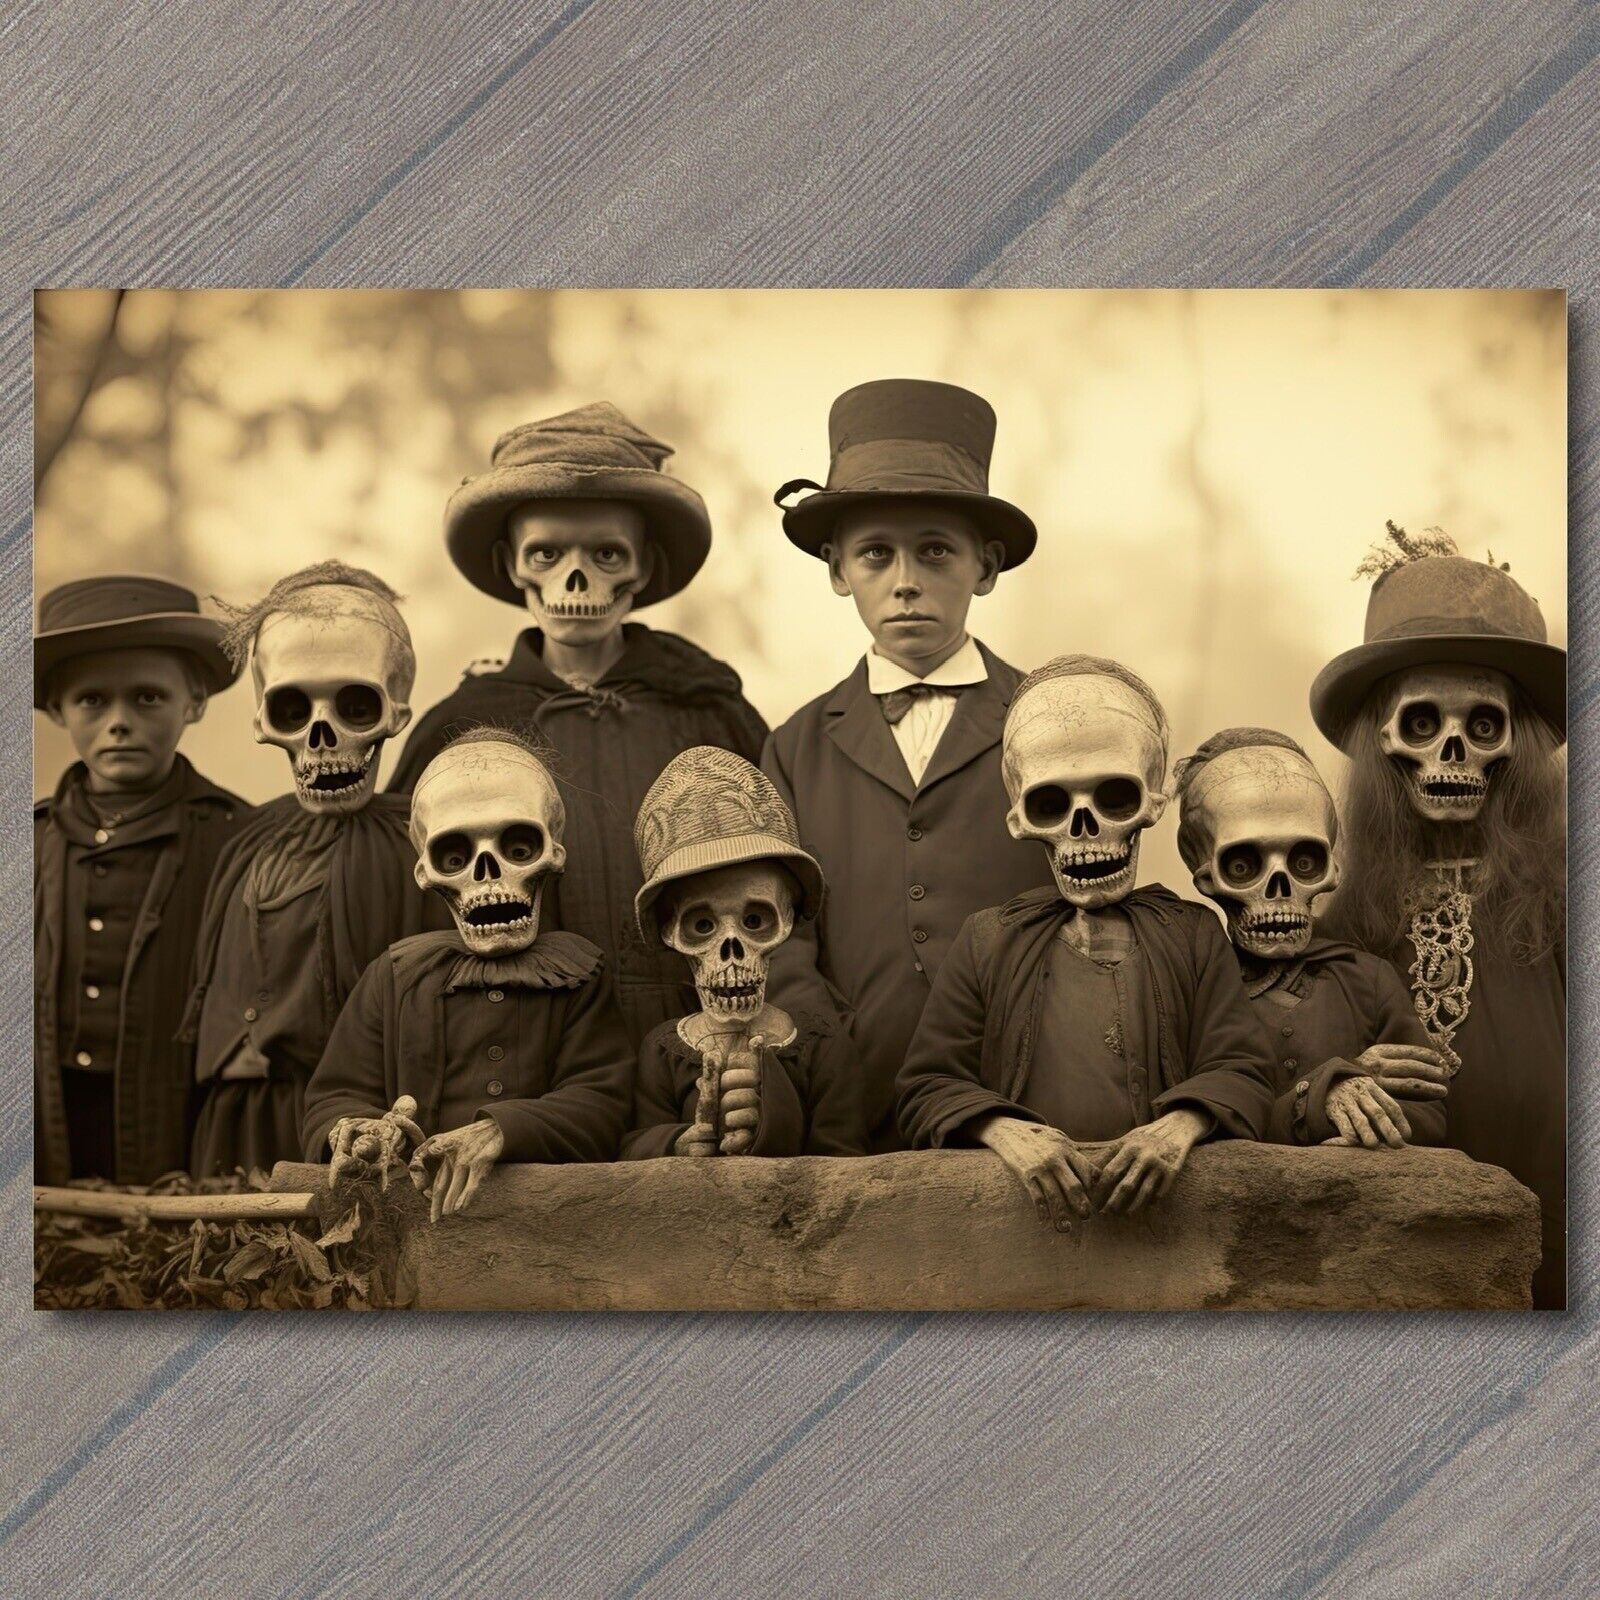 POSTCARD Weird Creepy Kids Family Old Fashion Vibe Masks Halloween Cult Unusual